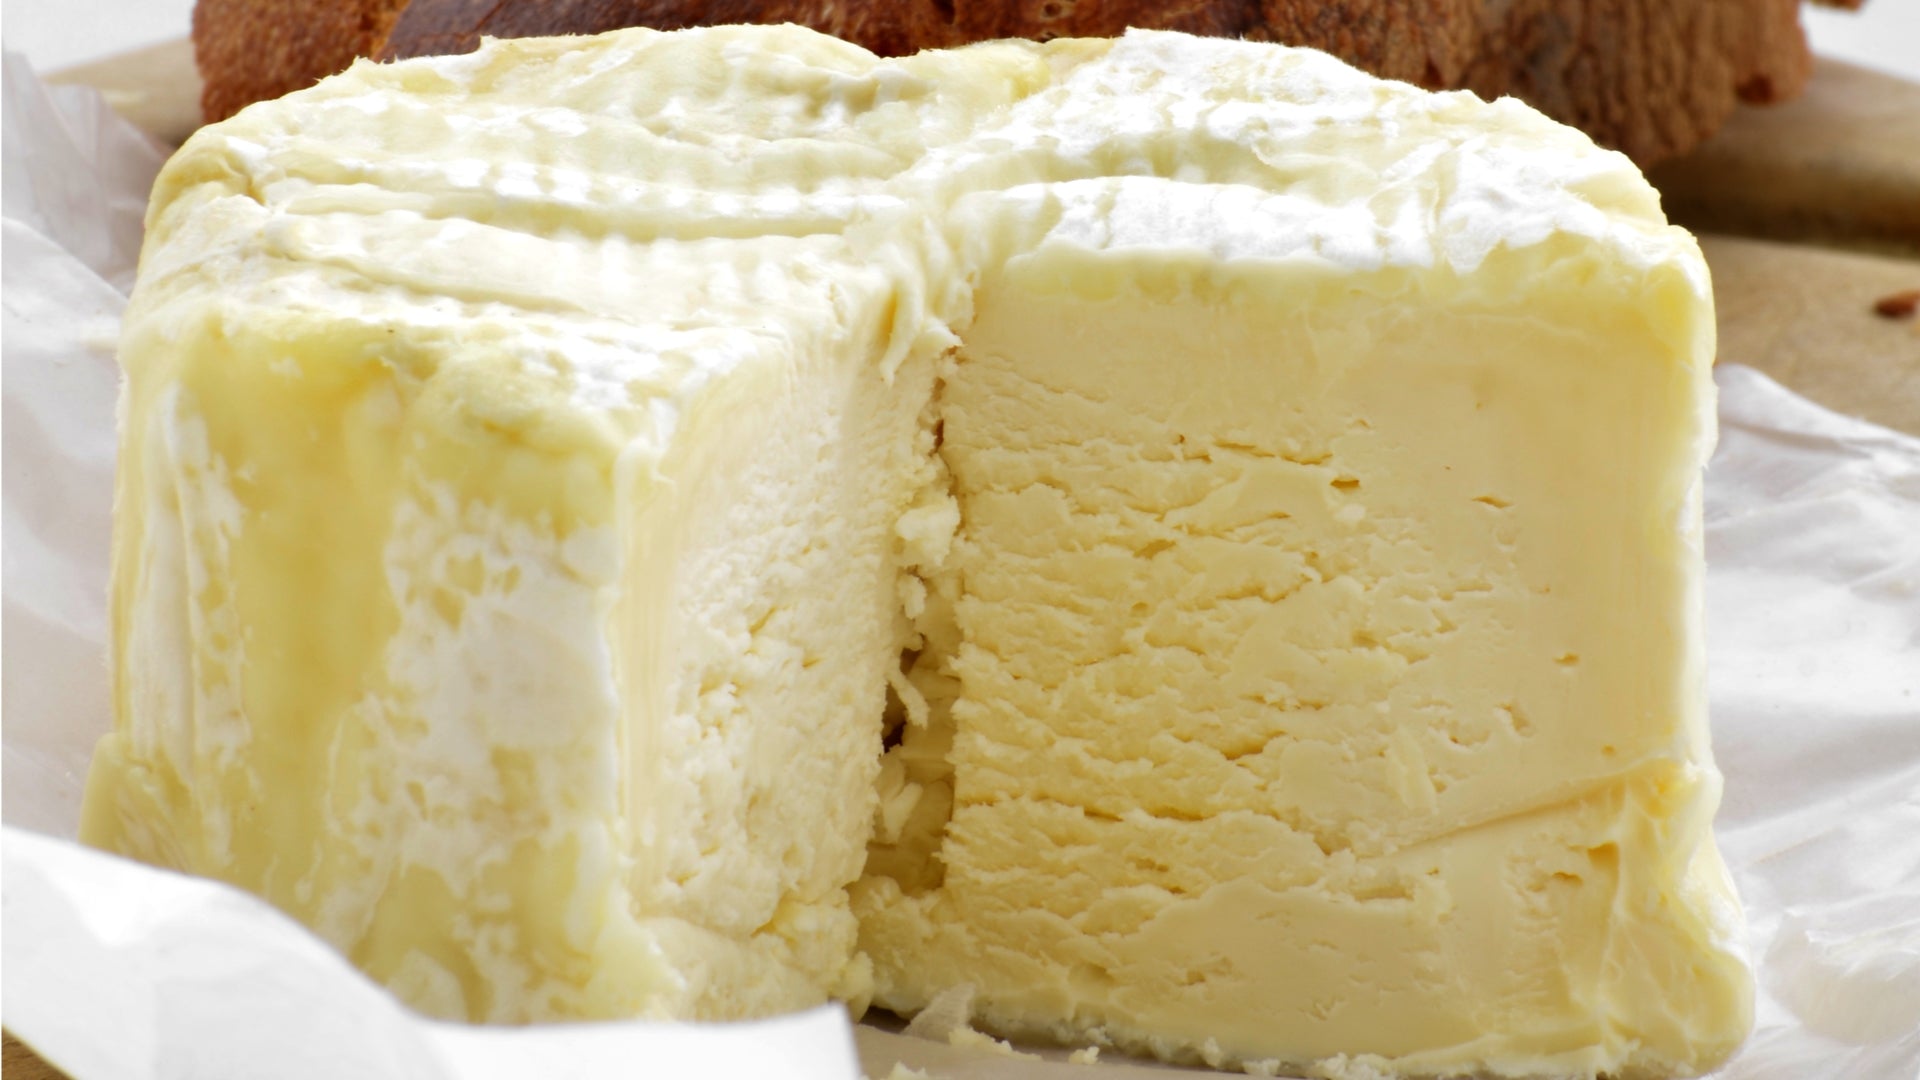 Cheese - Brillat Savarin 8 oz